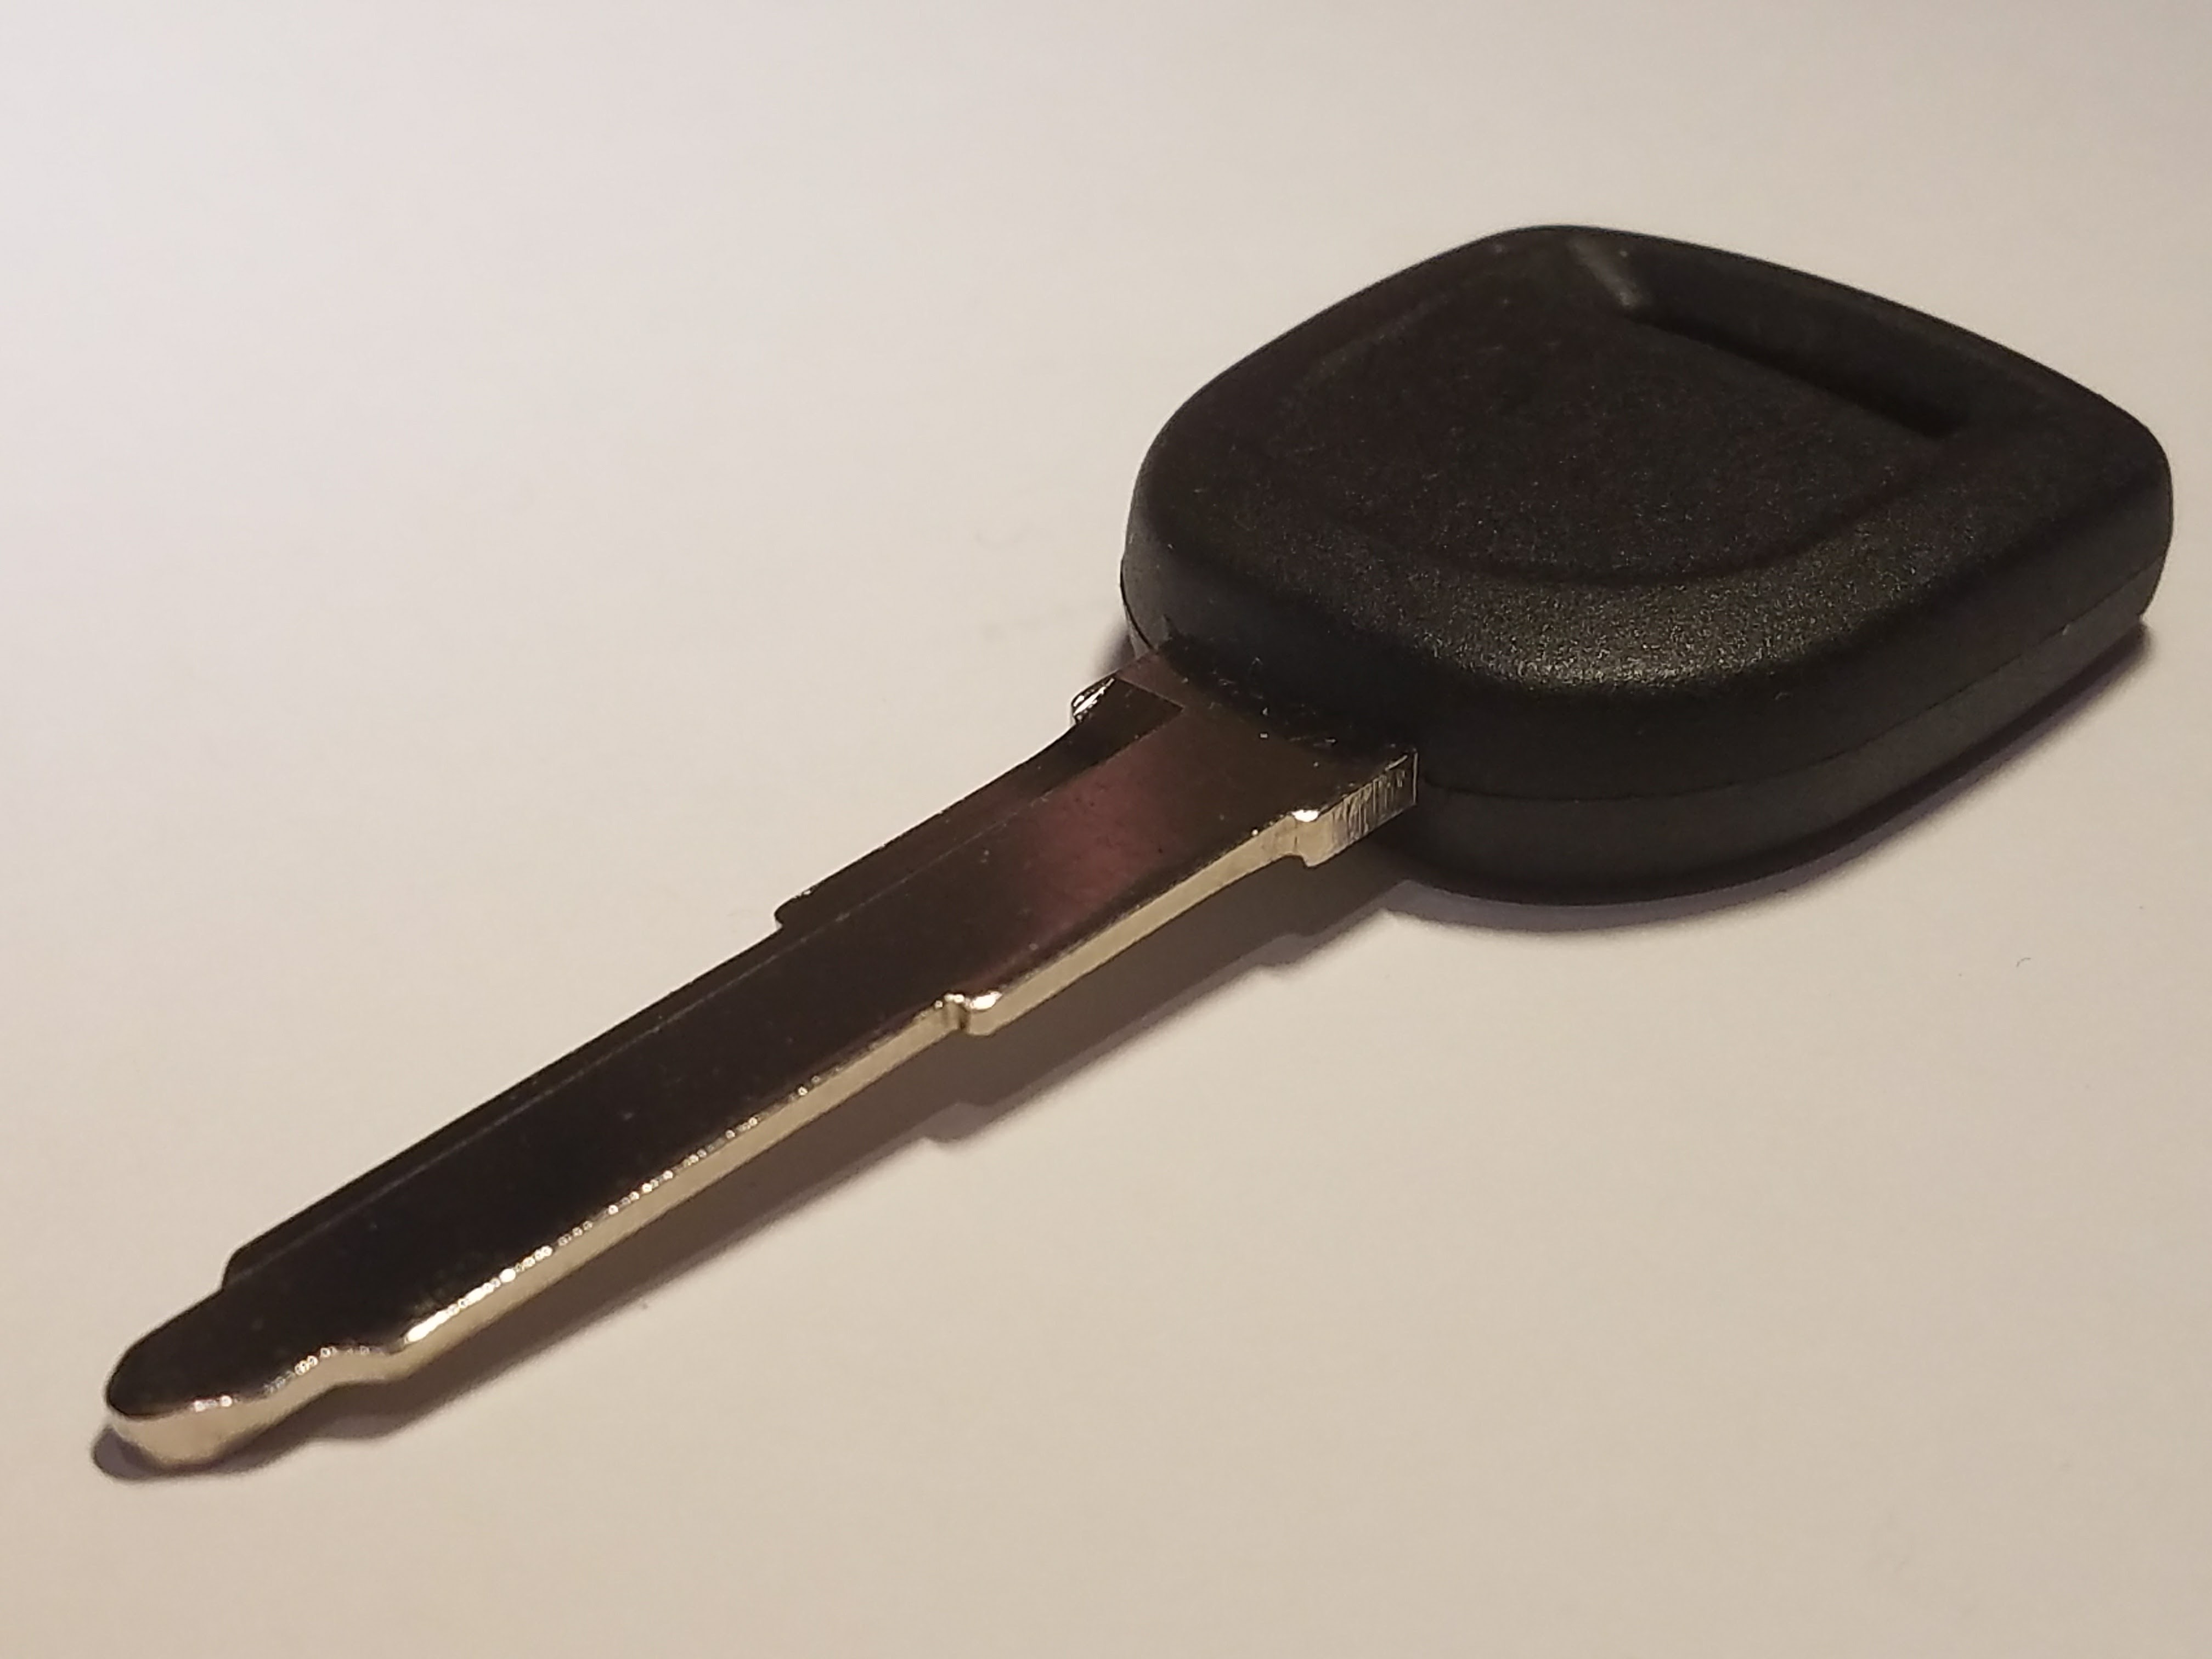 Mazda key replacement